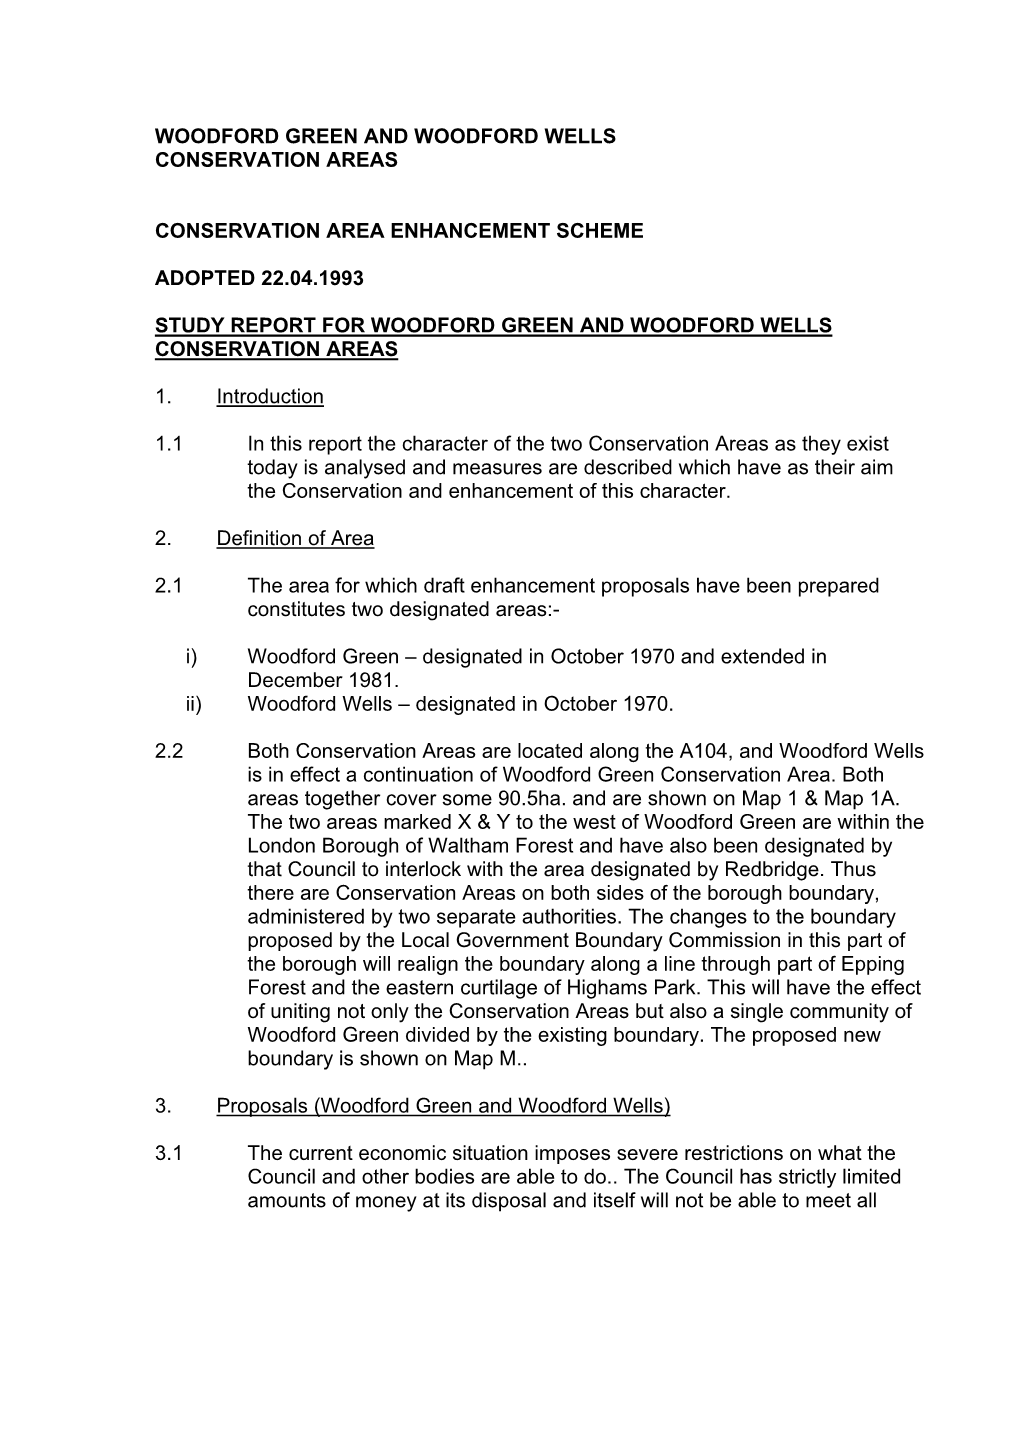 Woodford Green and Wells Enhancement Scheme